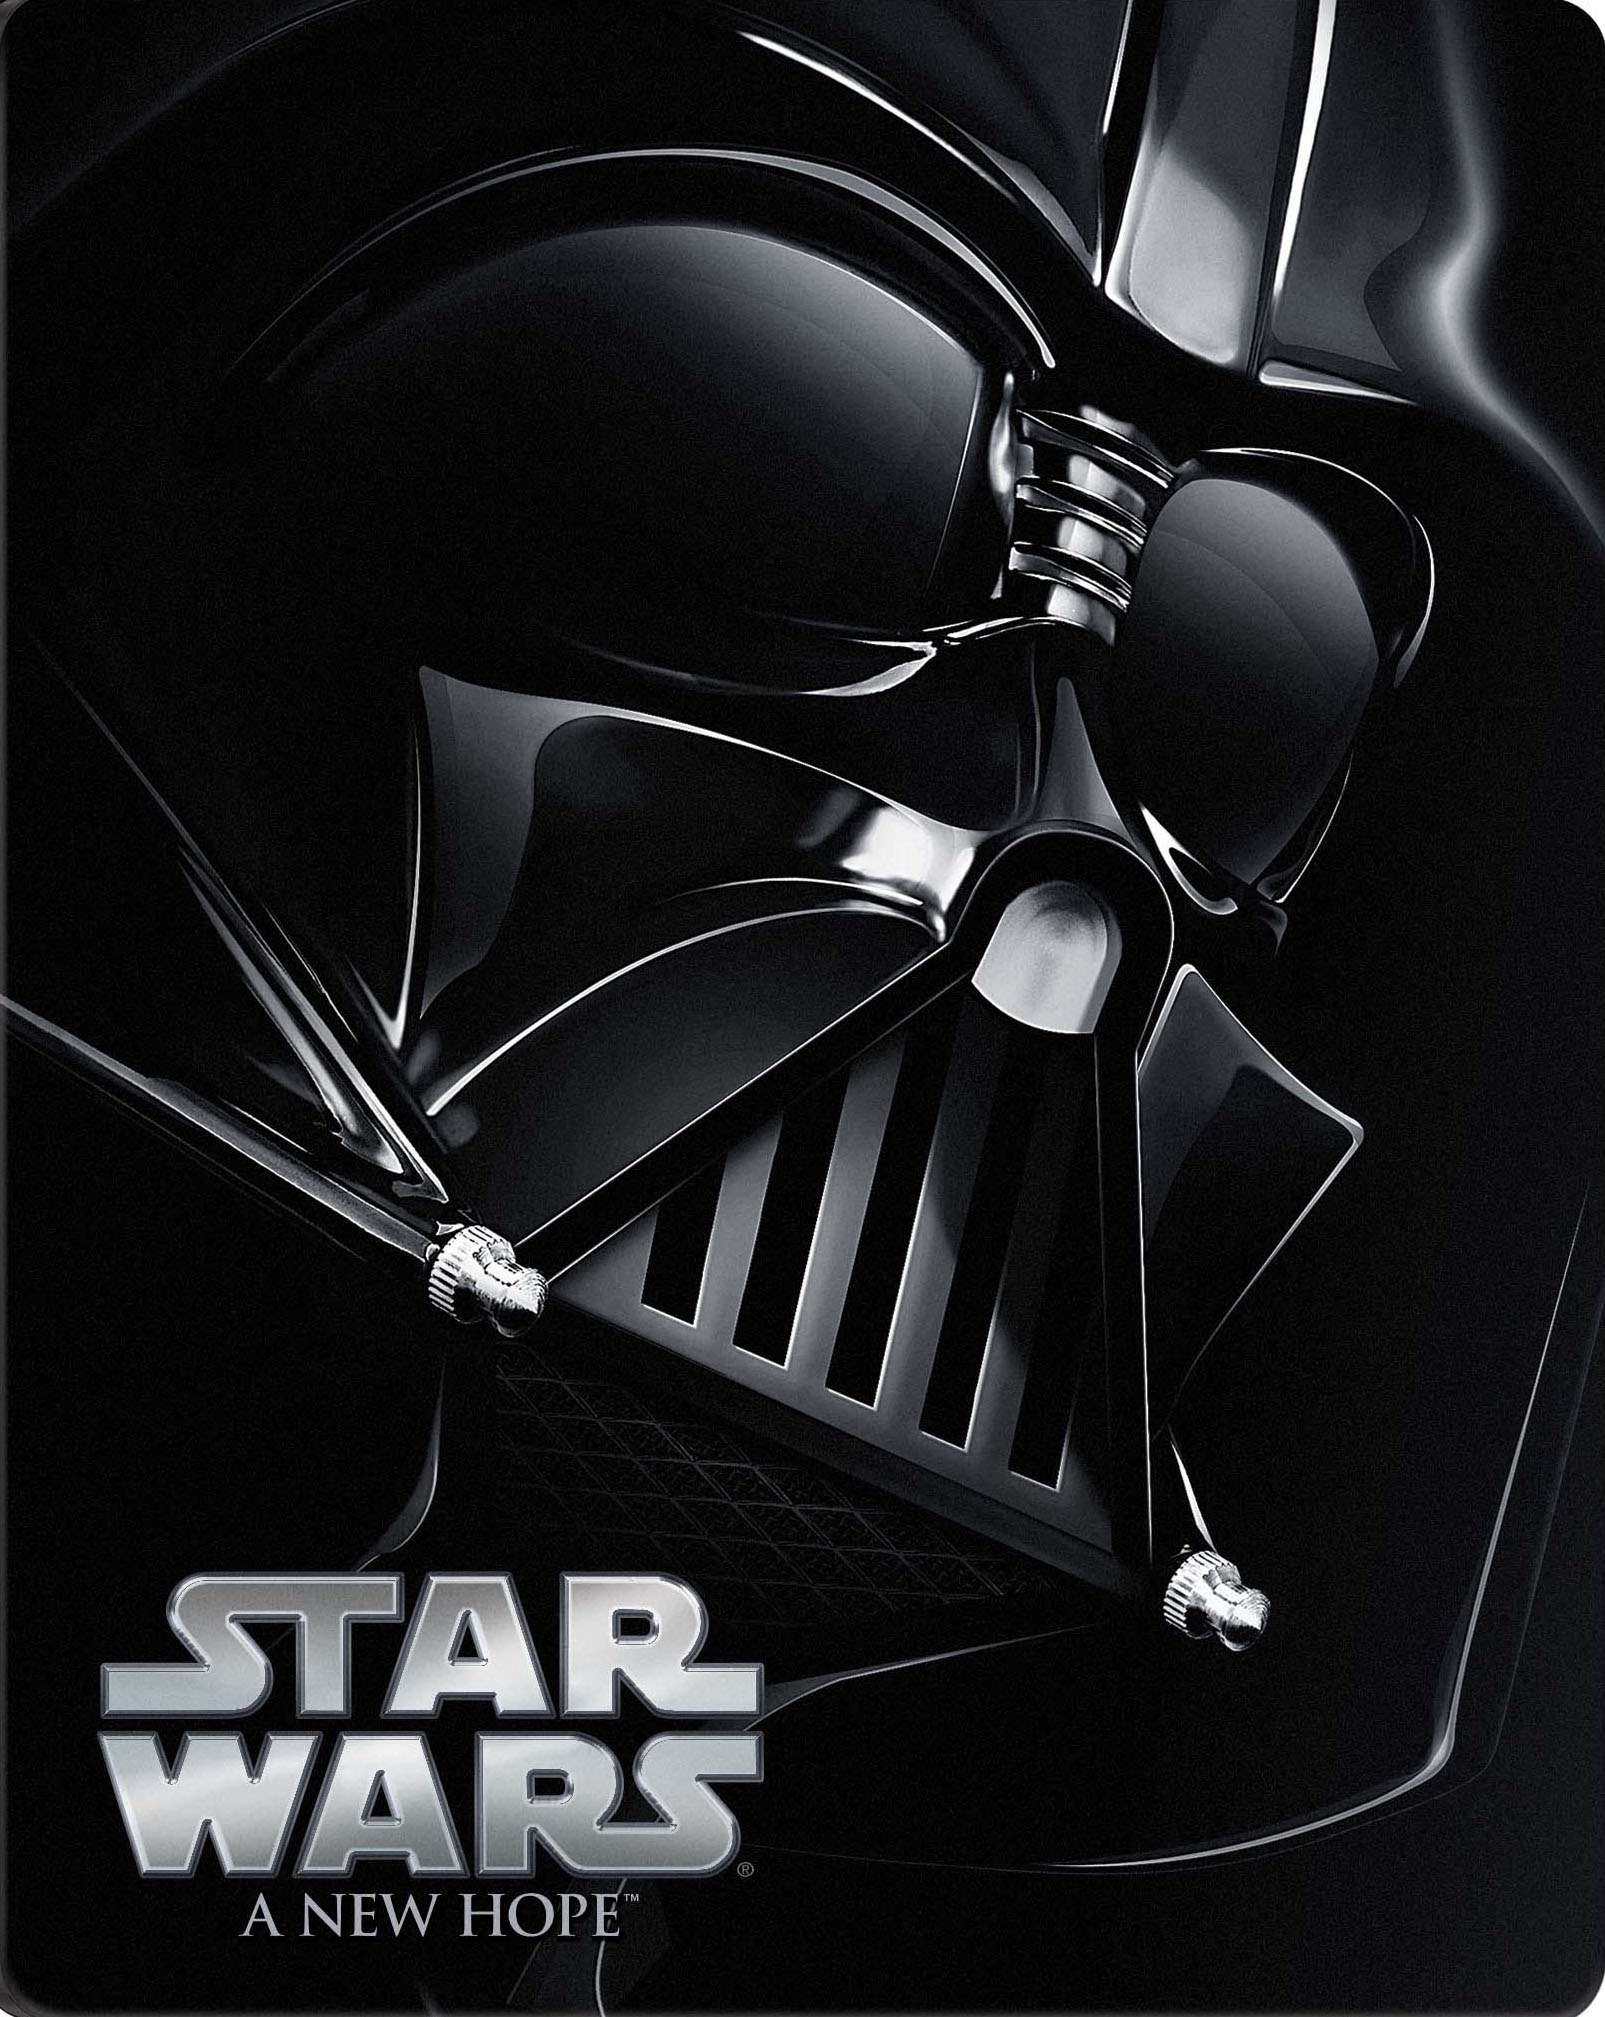 Star Wars: Empire Strikes Back [Includes Digital Copy] [Blu-ray] [1980] -  Best Buy